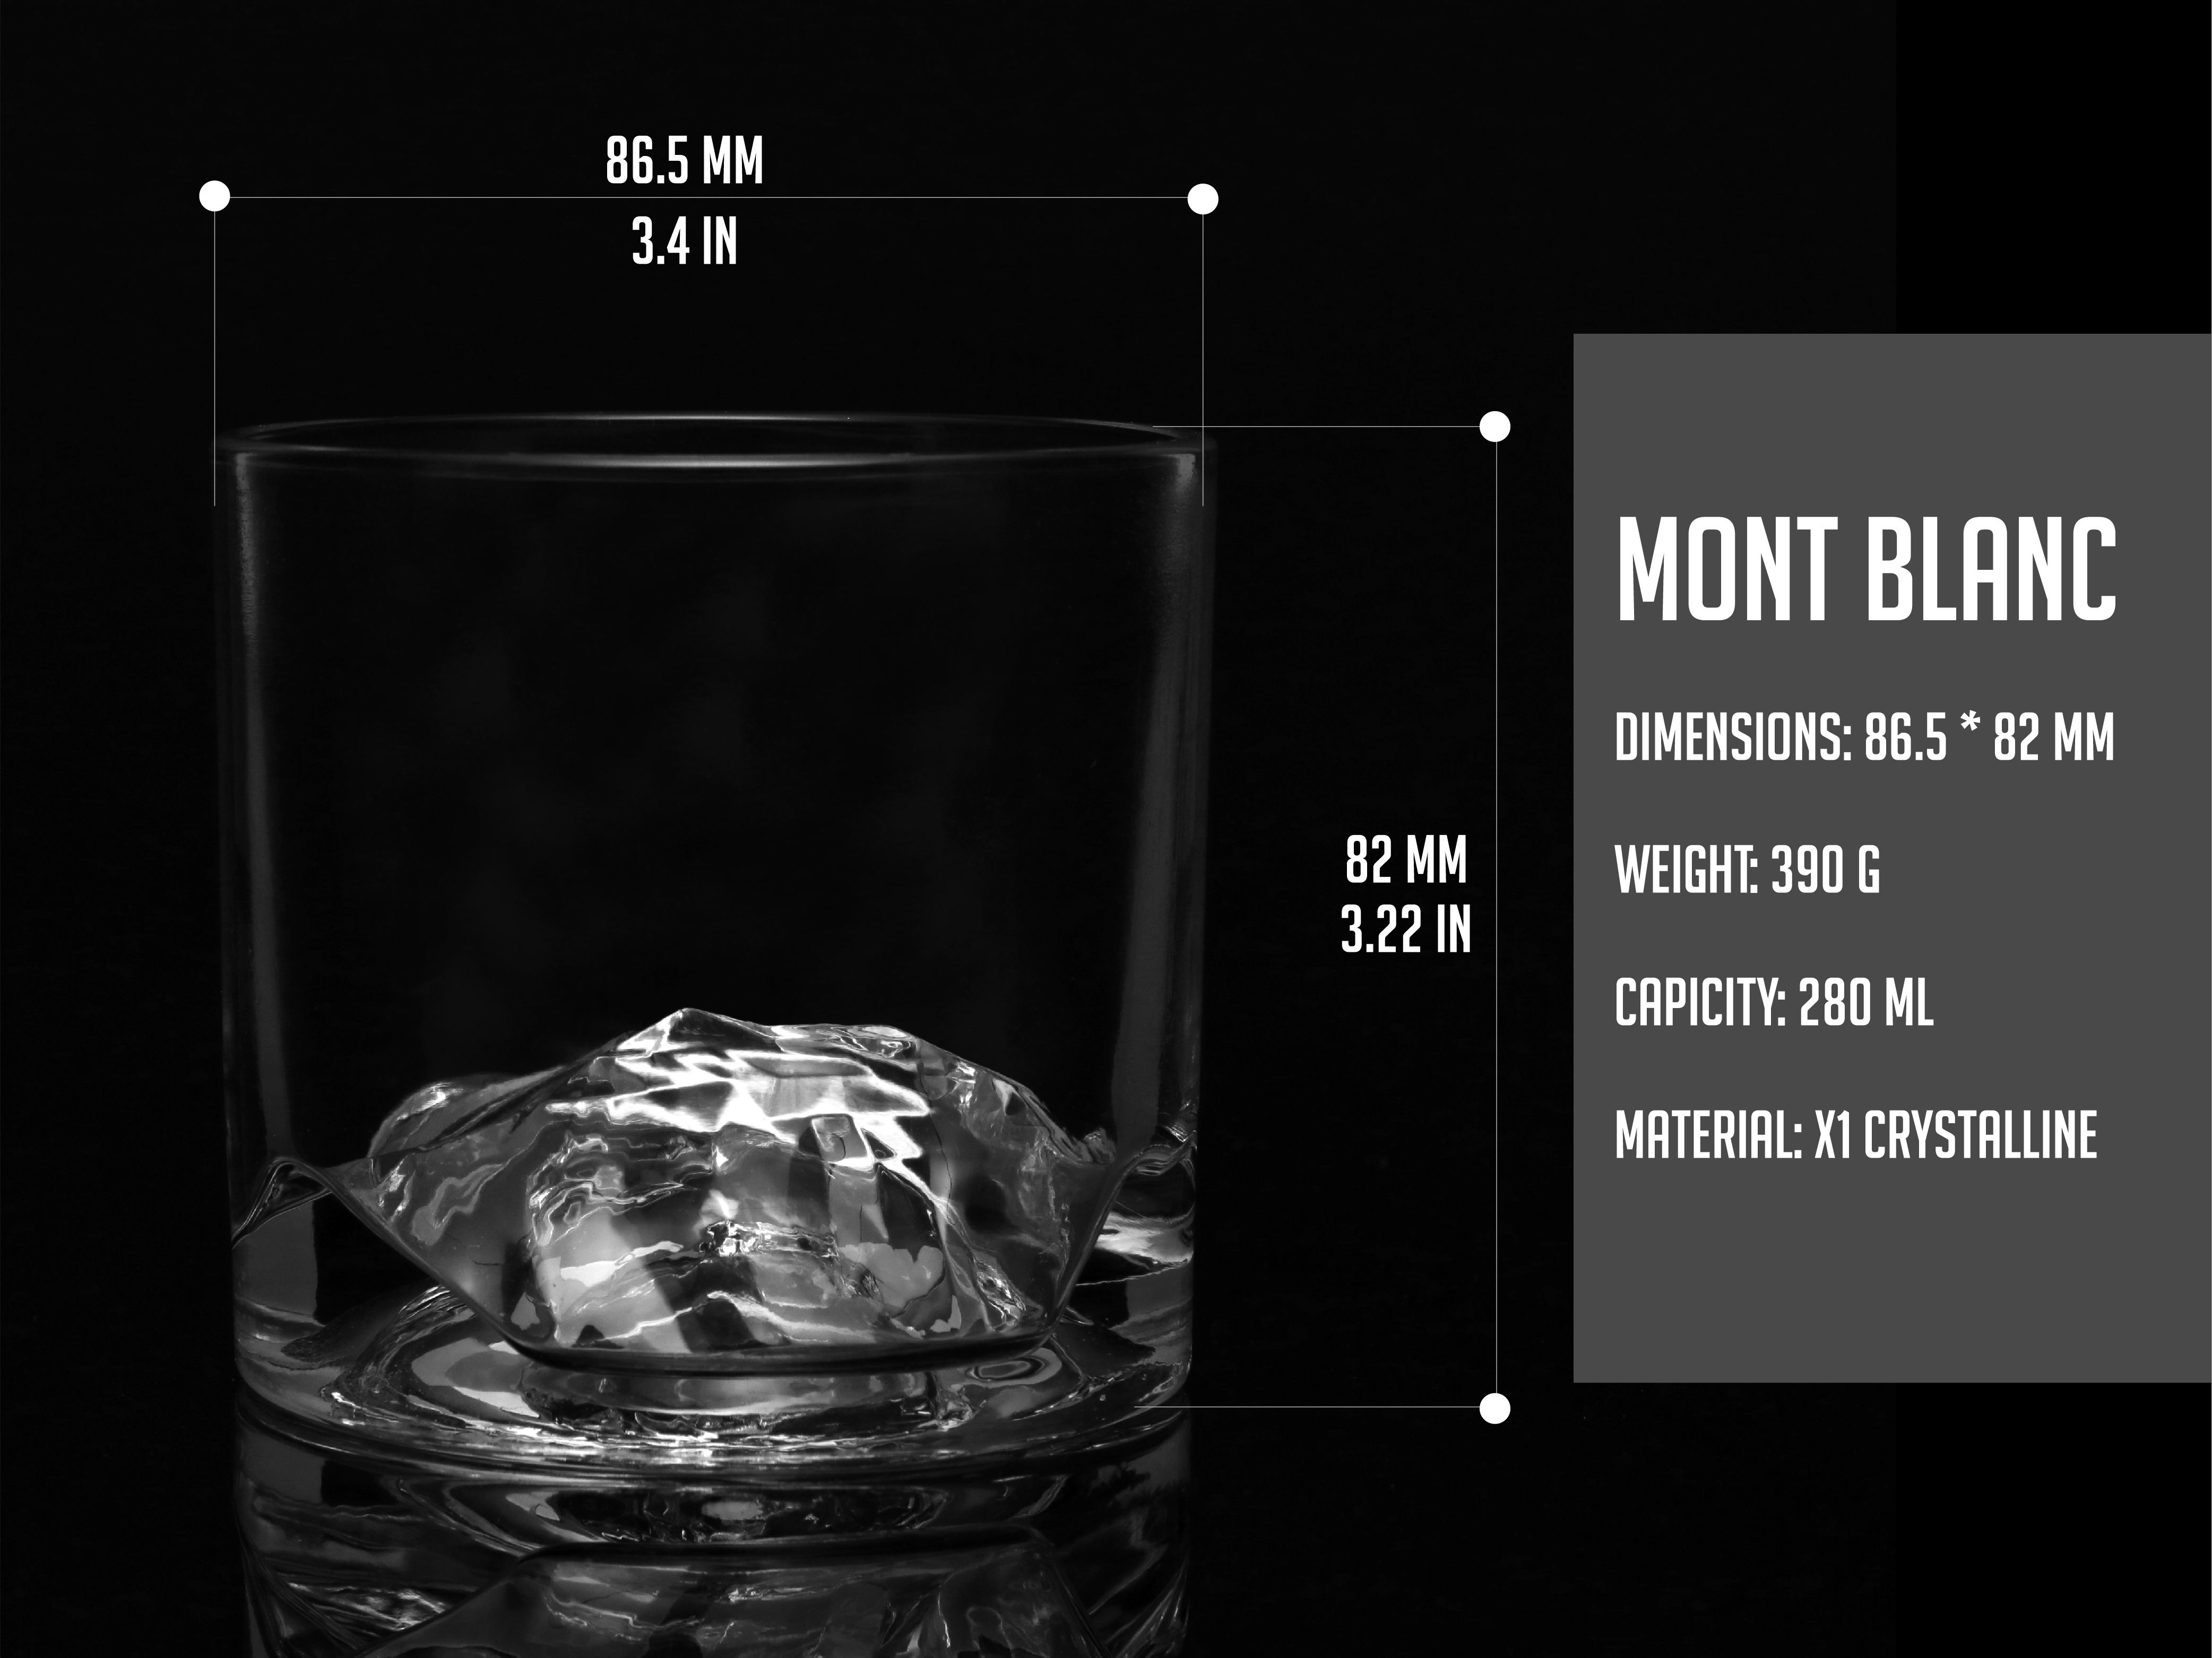 Whiskygläser Liiton "Mont Blanc" - 2er-Set